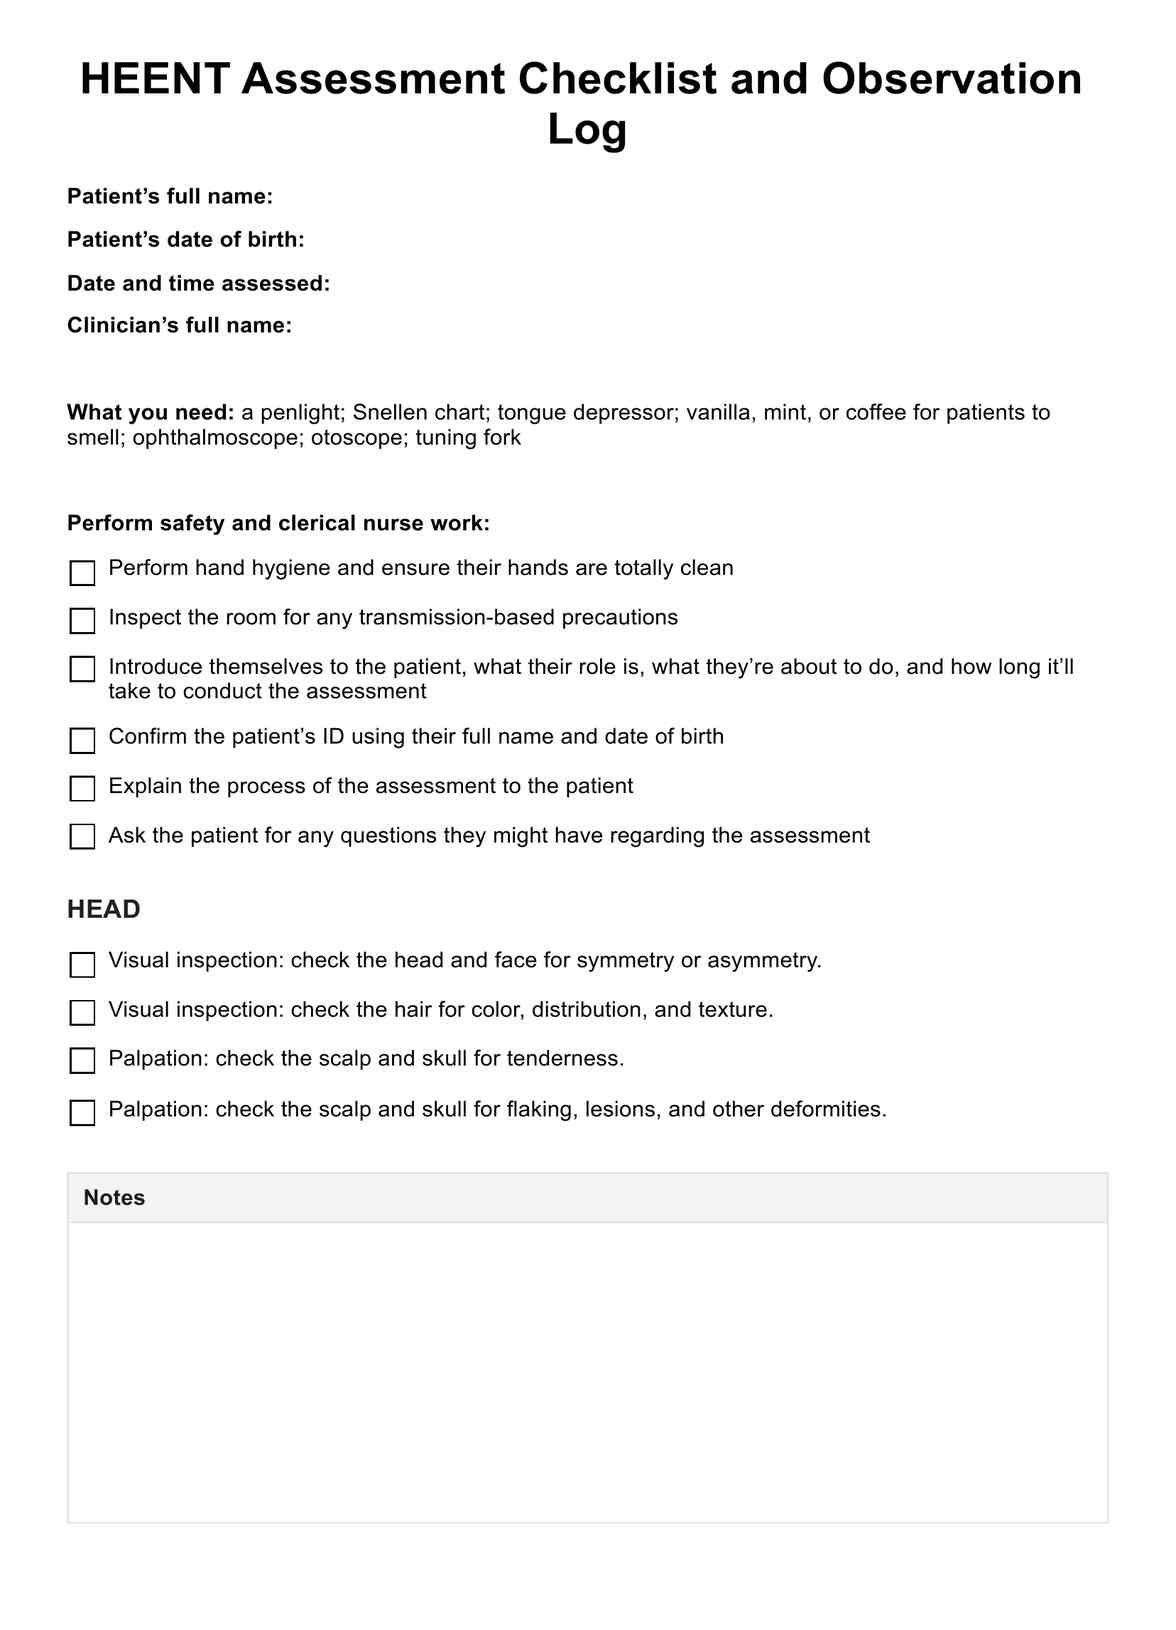 HEENT Assessment PDF Example